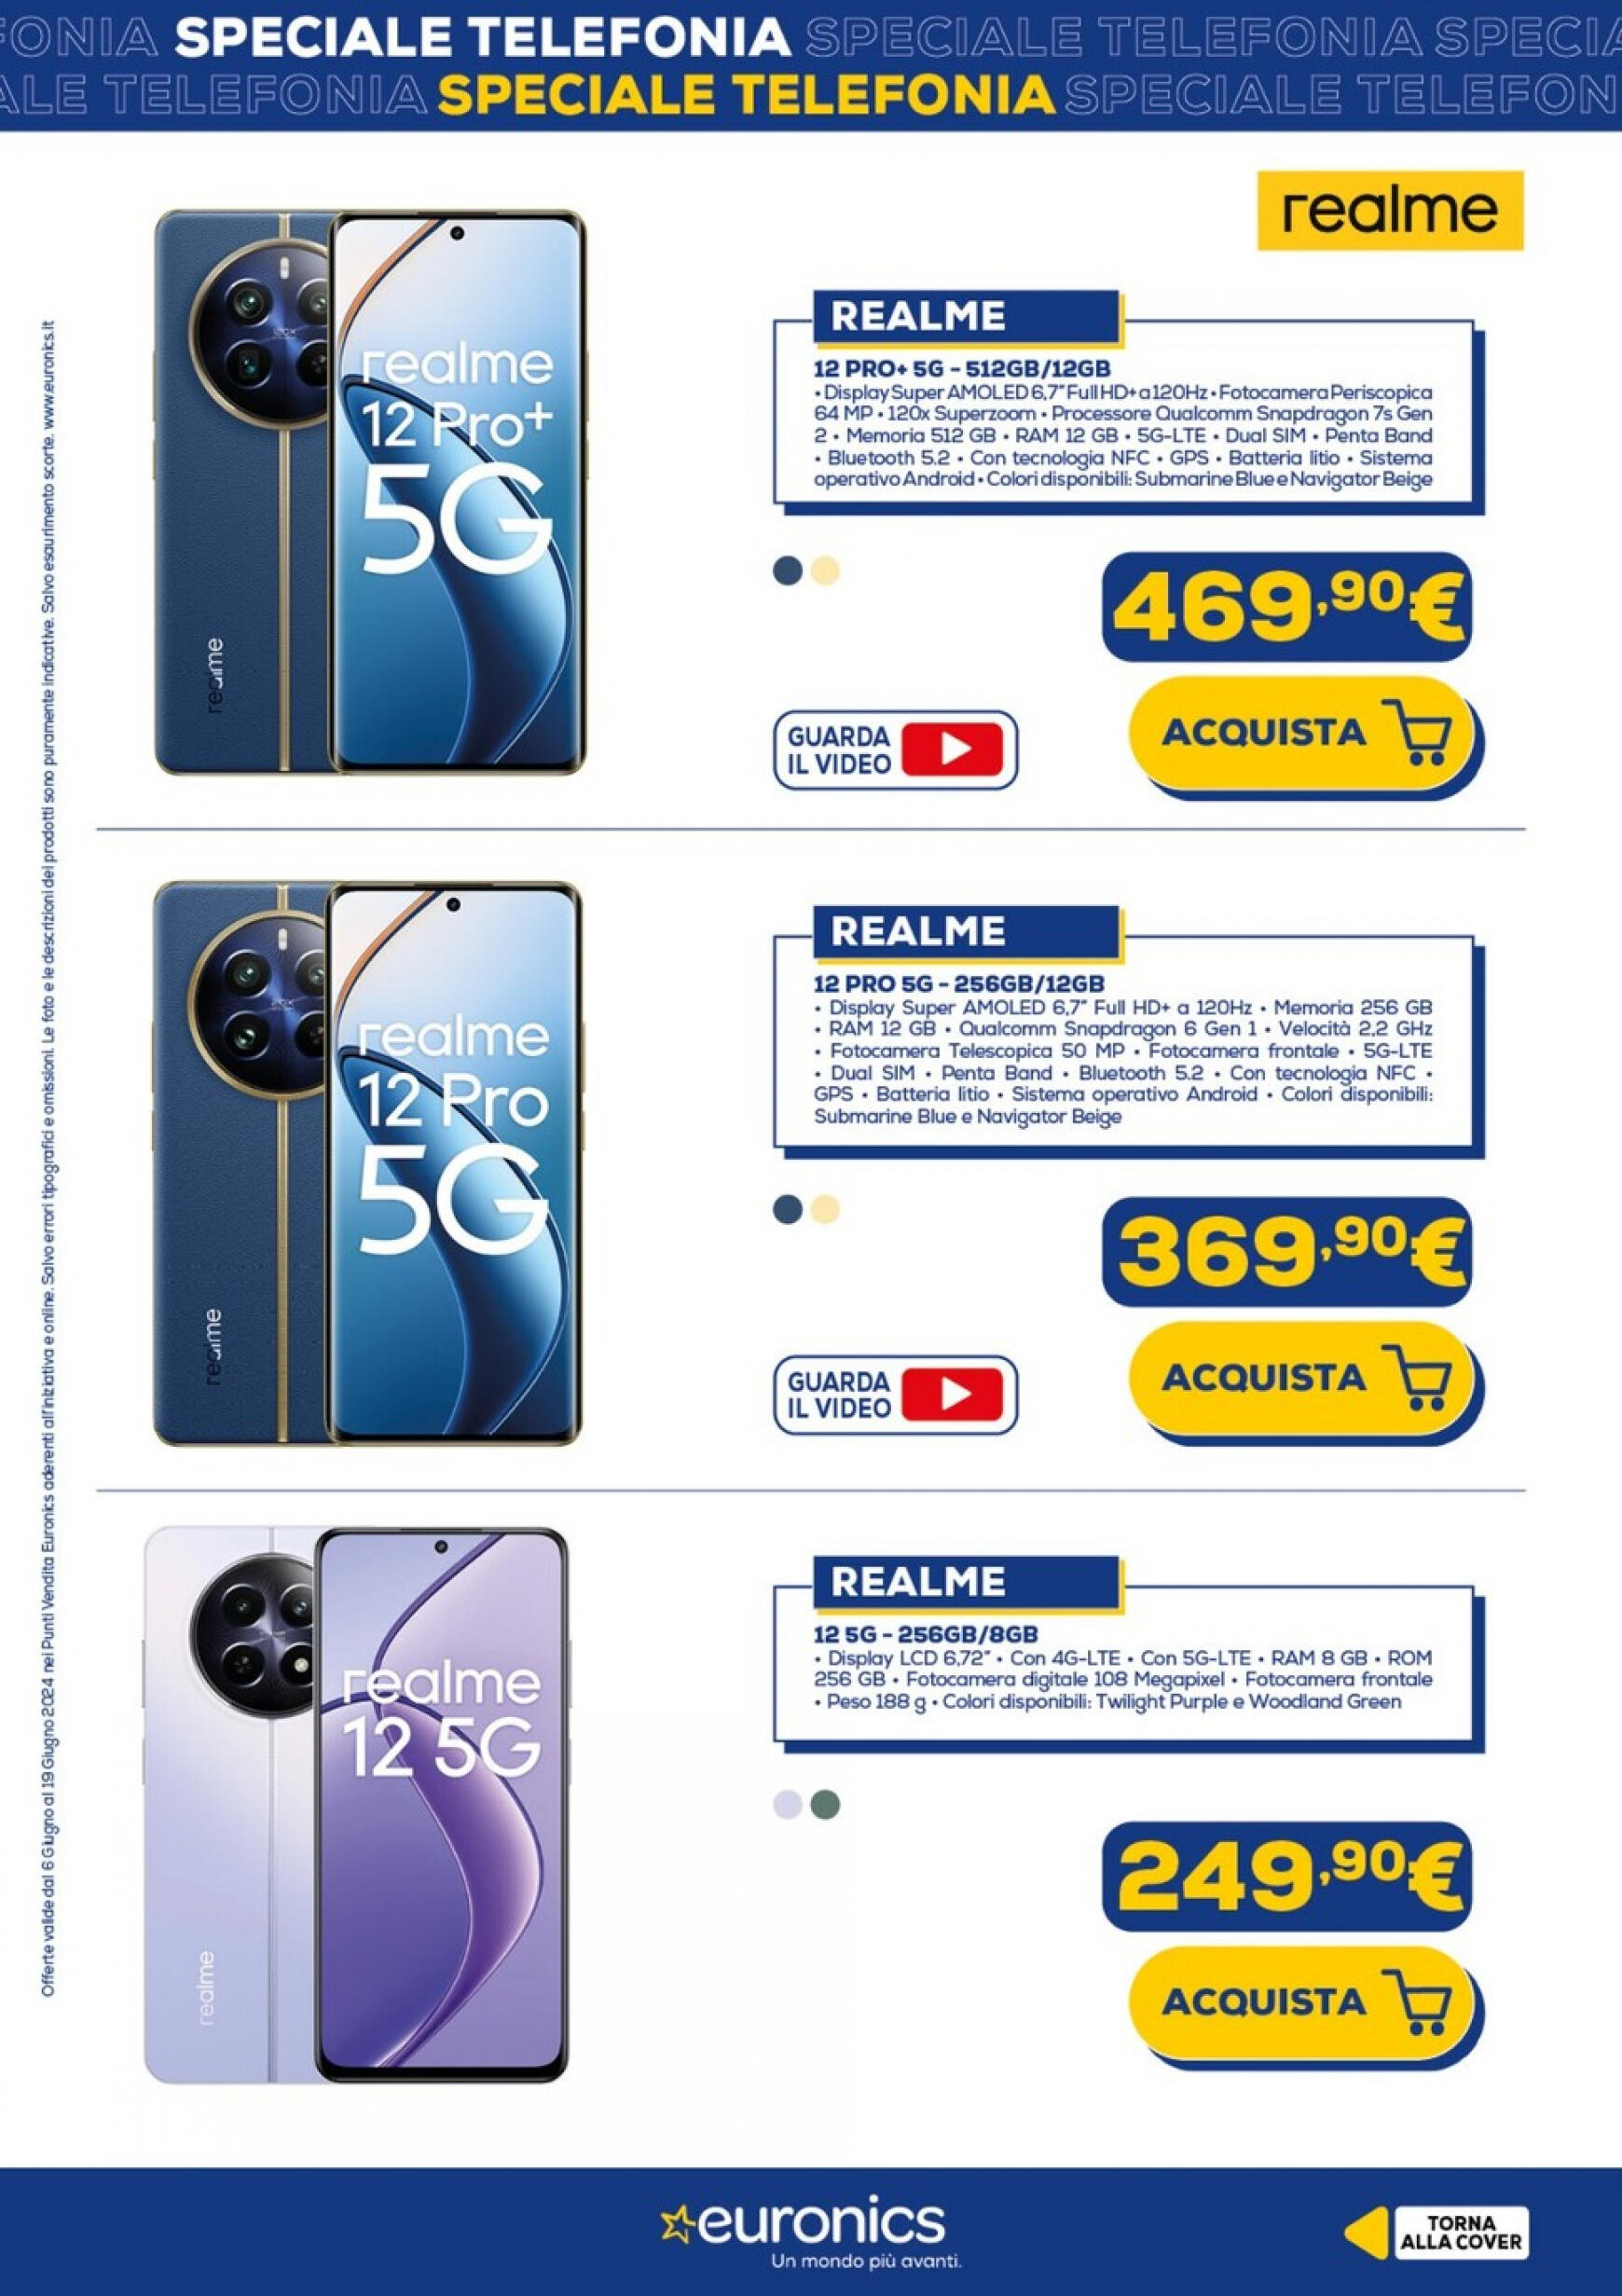 euronics - Nuovo volantino Euronics - Speciale Telefonia 06.06. - 19.06. - page: 6